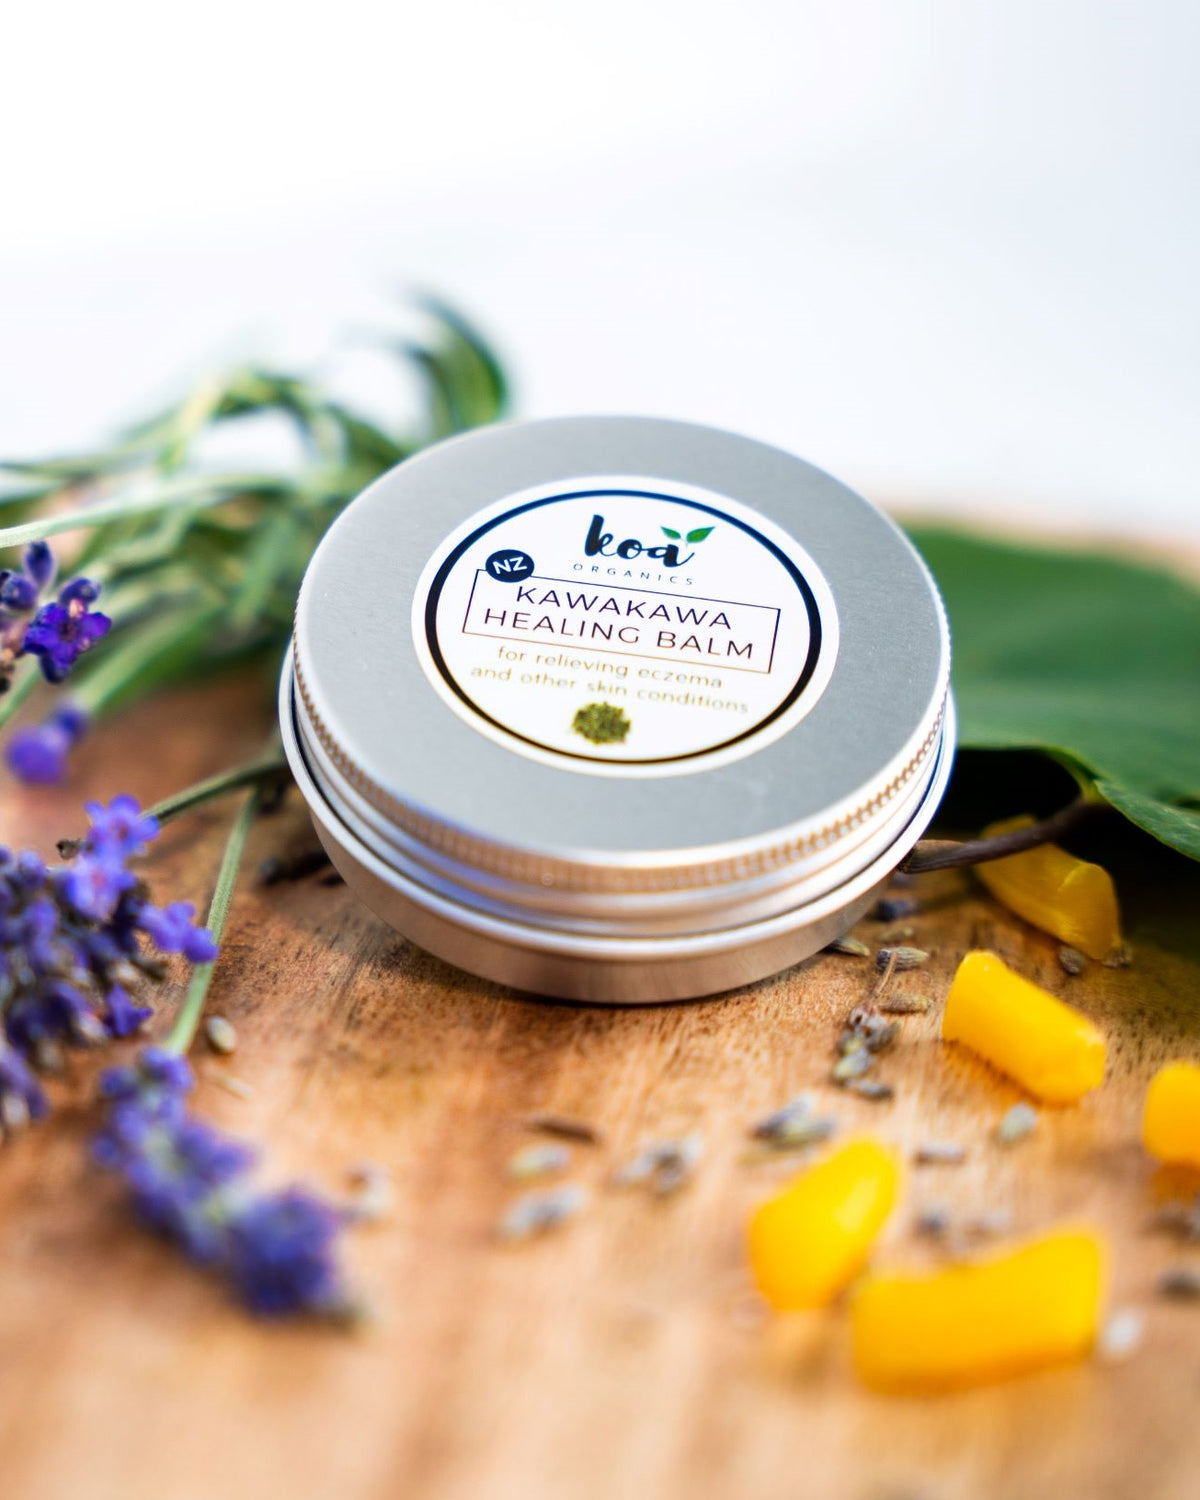 Natural and organic Kawakawa Balm with NZ beeswax heals eczema and dry itchy skin